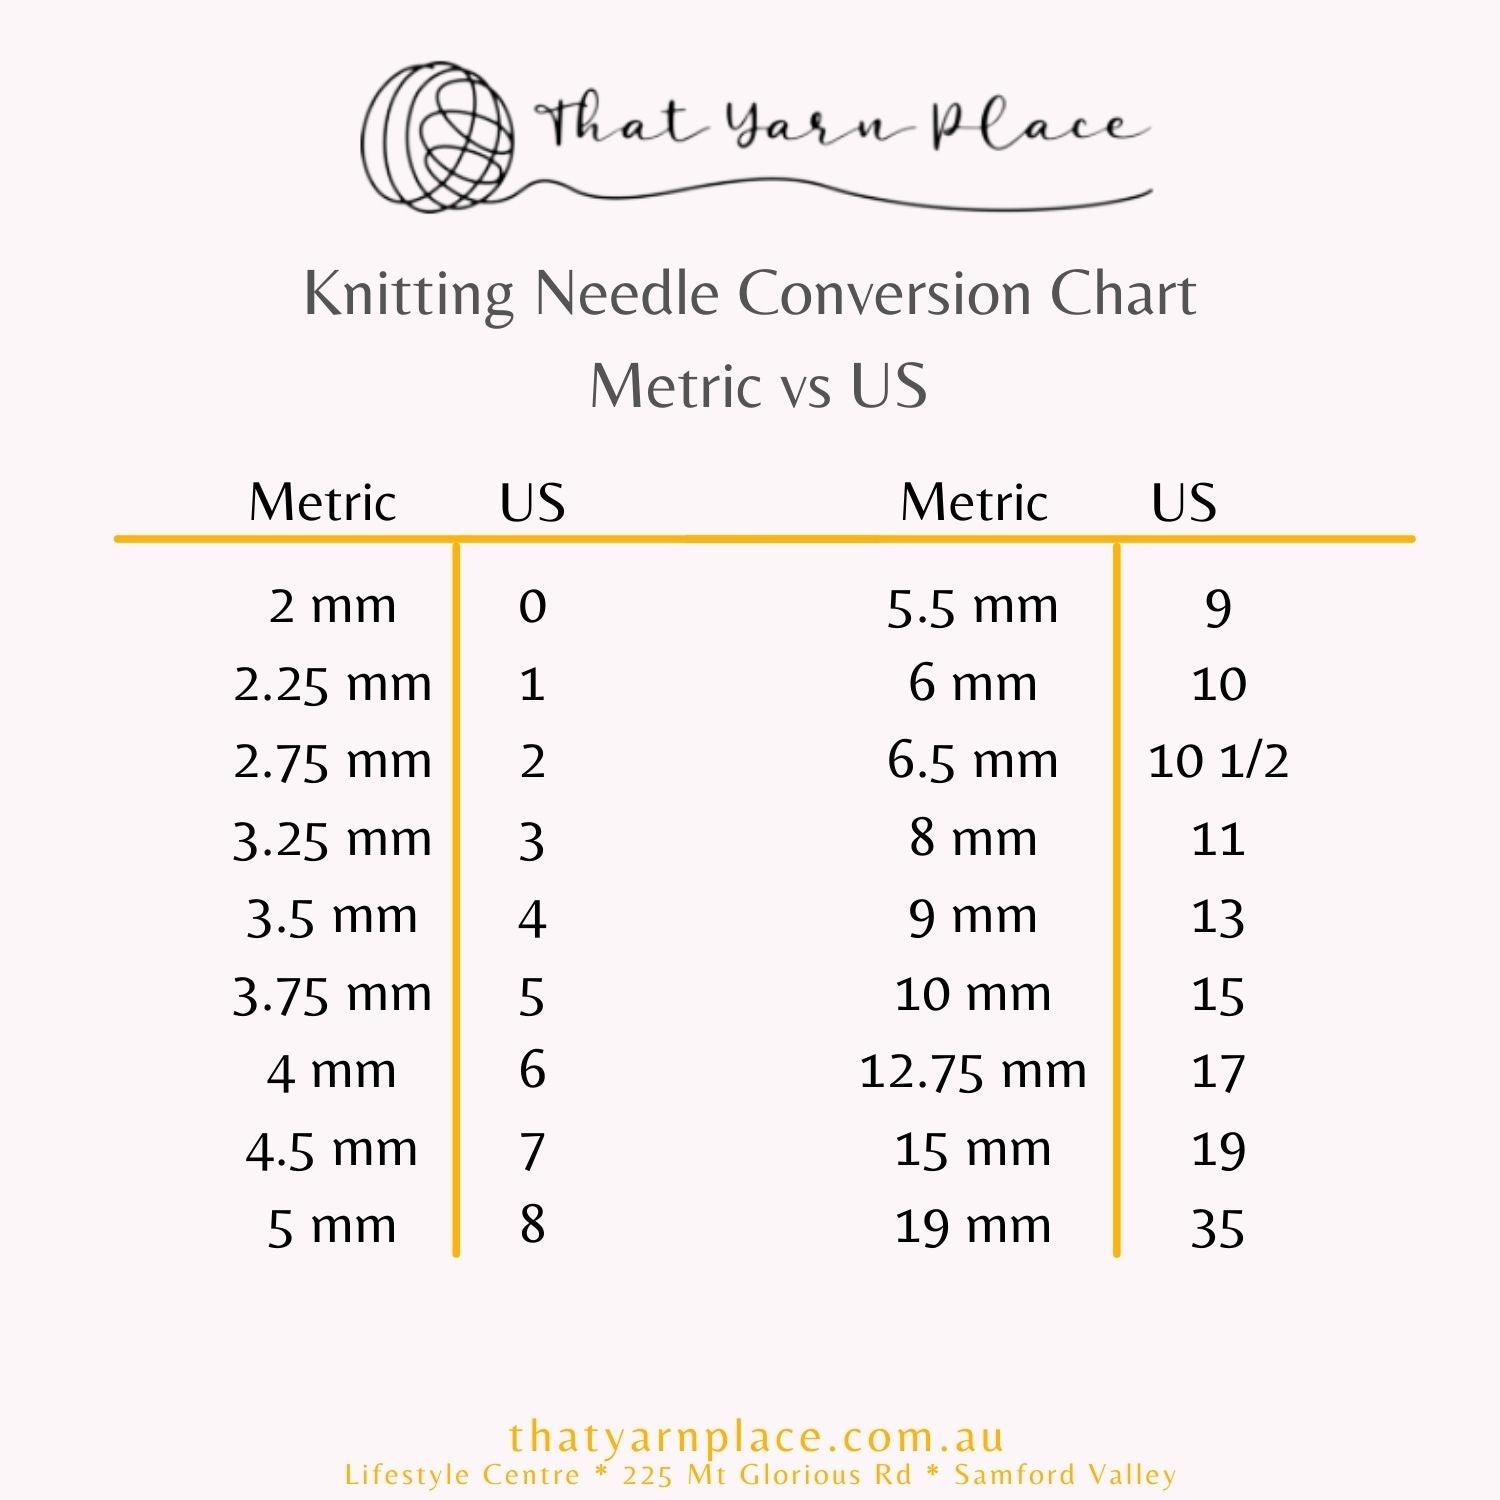 Knitting Needle Size Conversion Chart Metric vs US